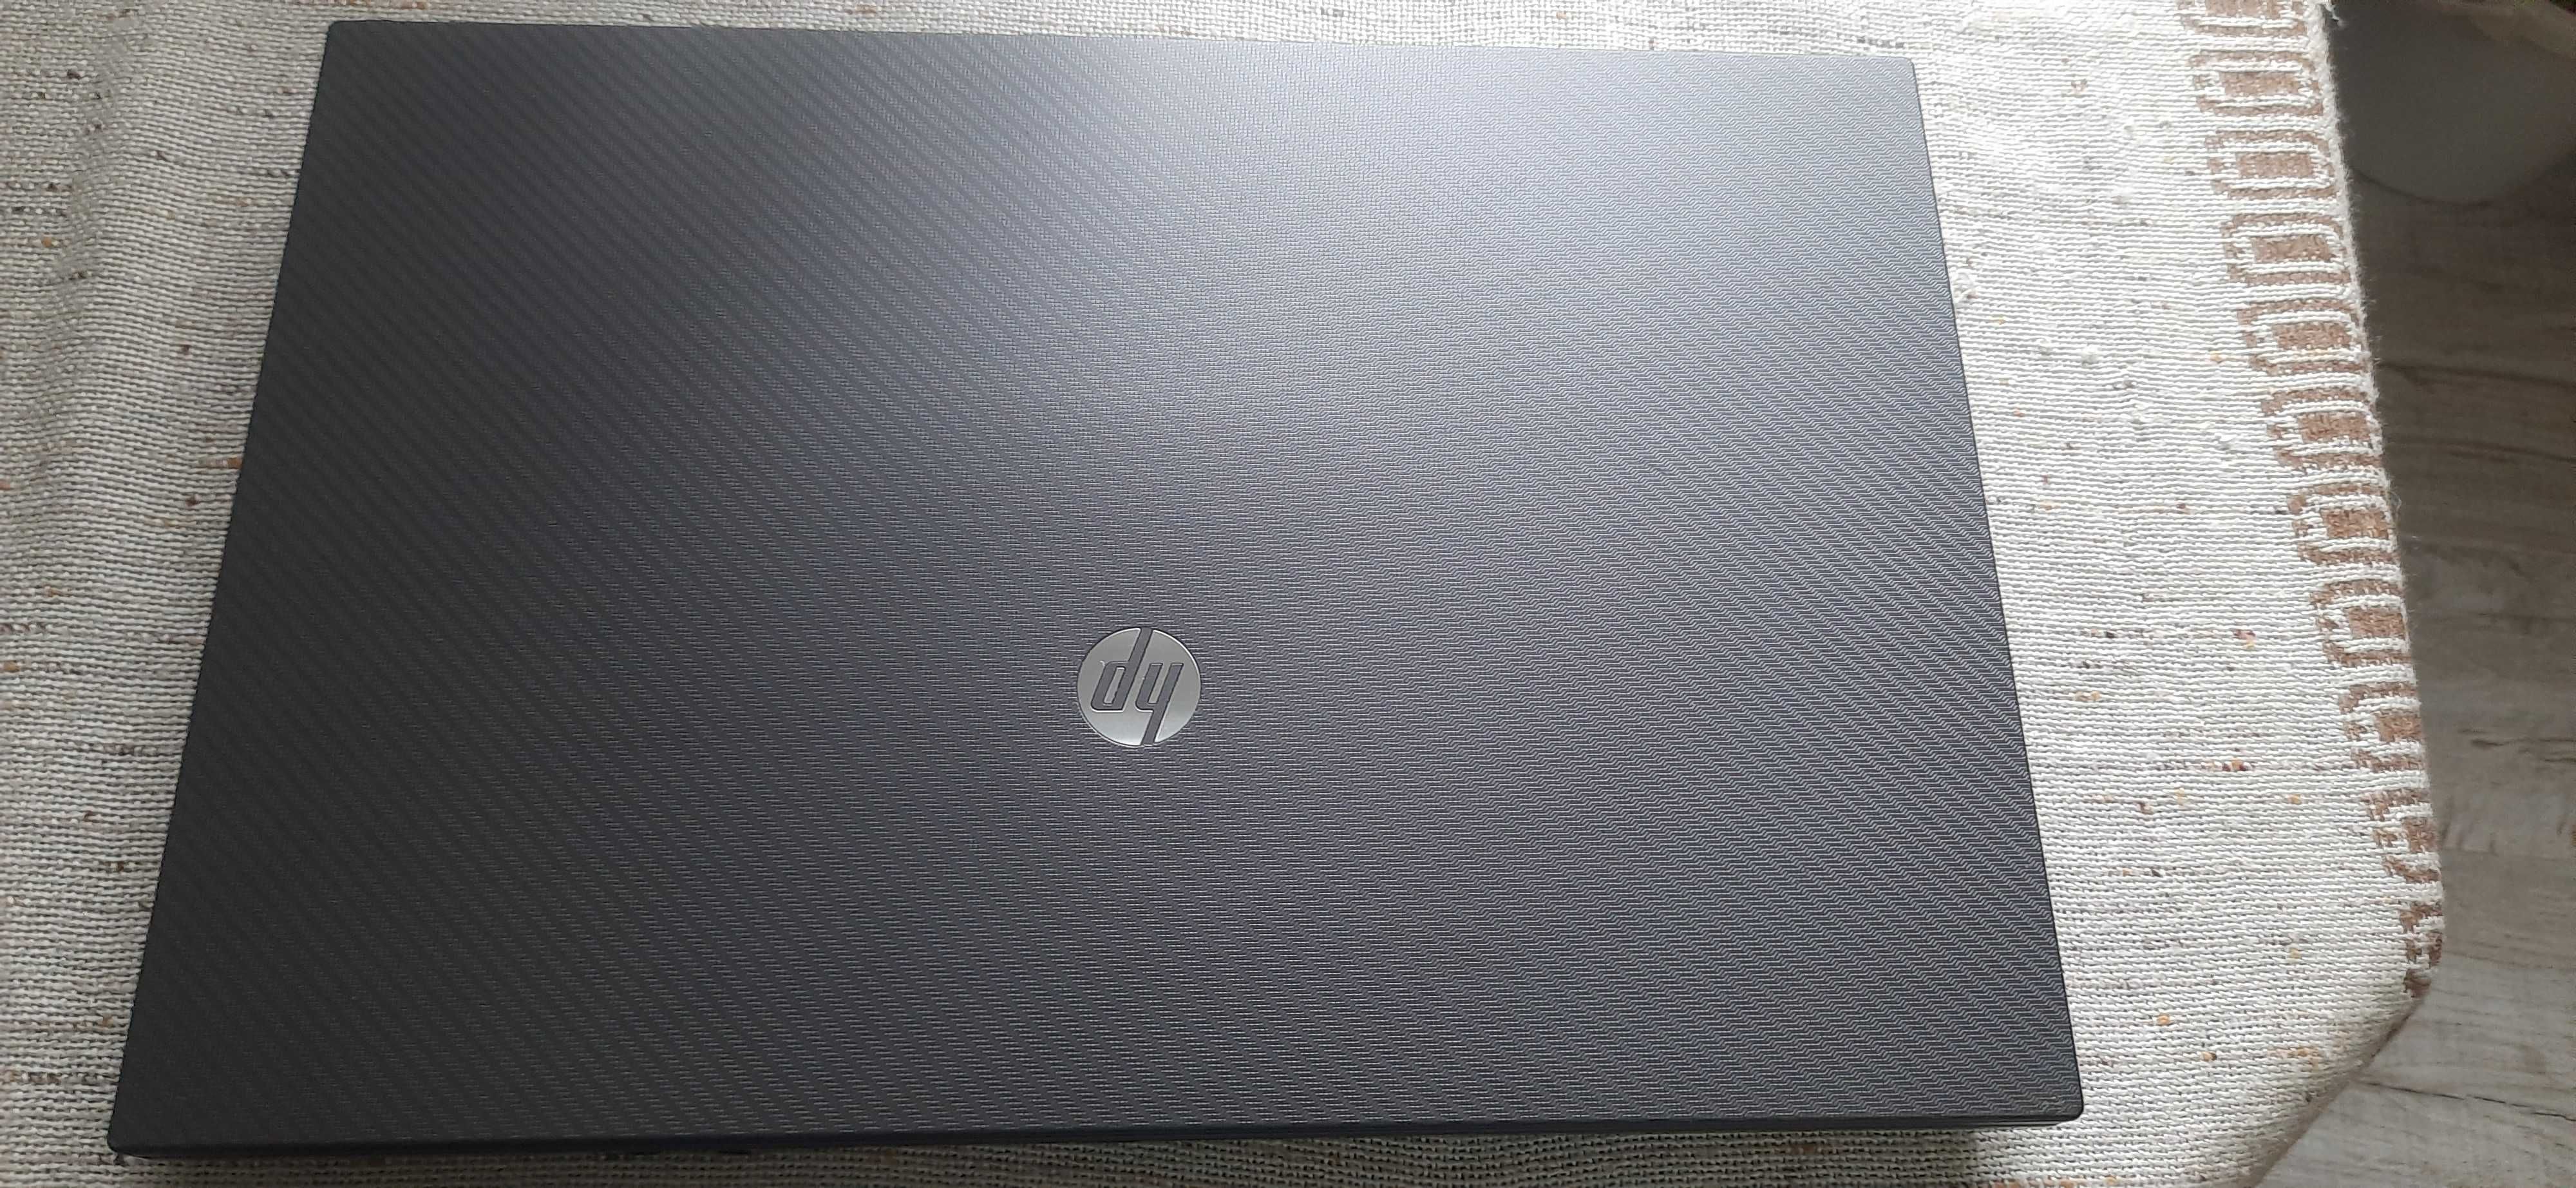 Ноутбук HP 620 .